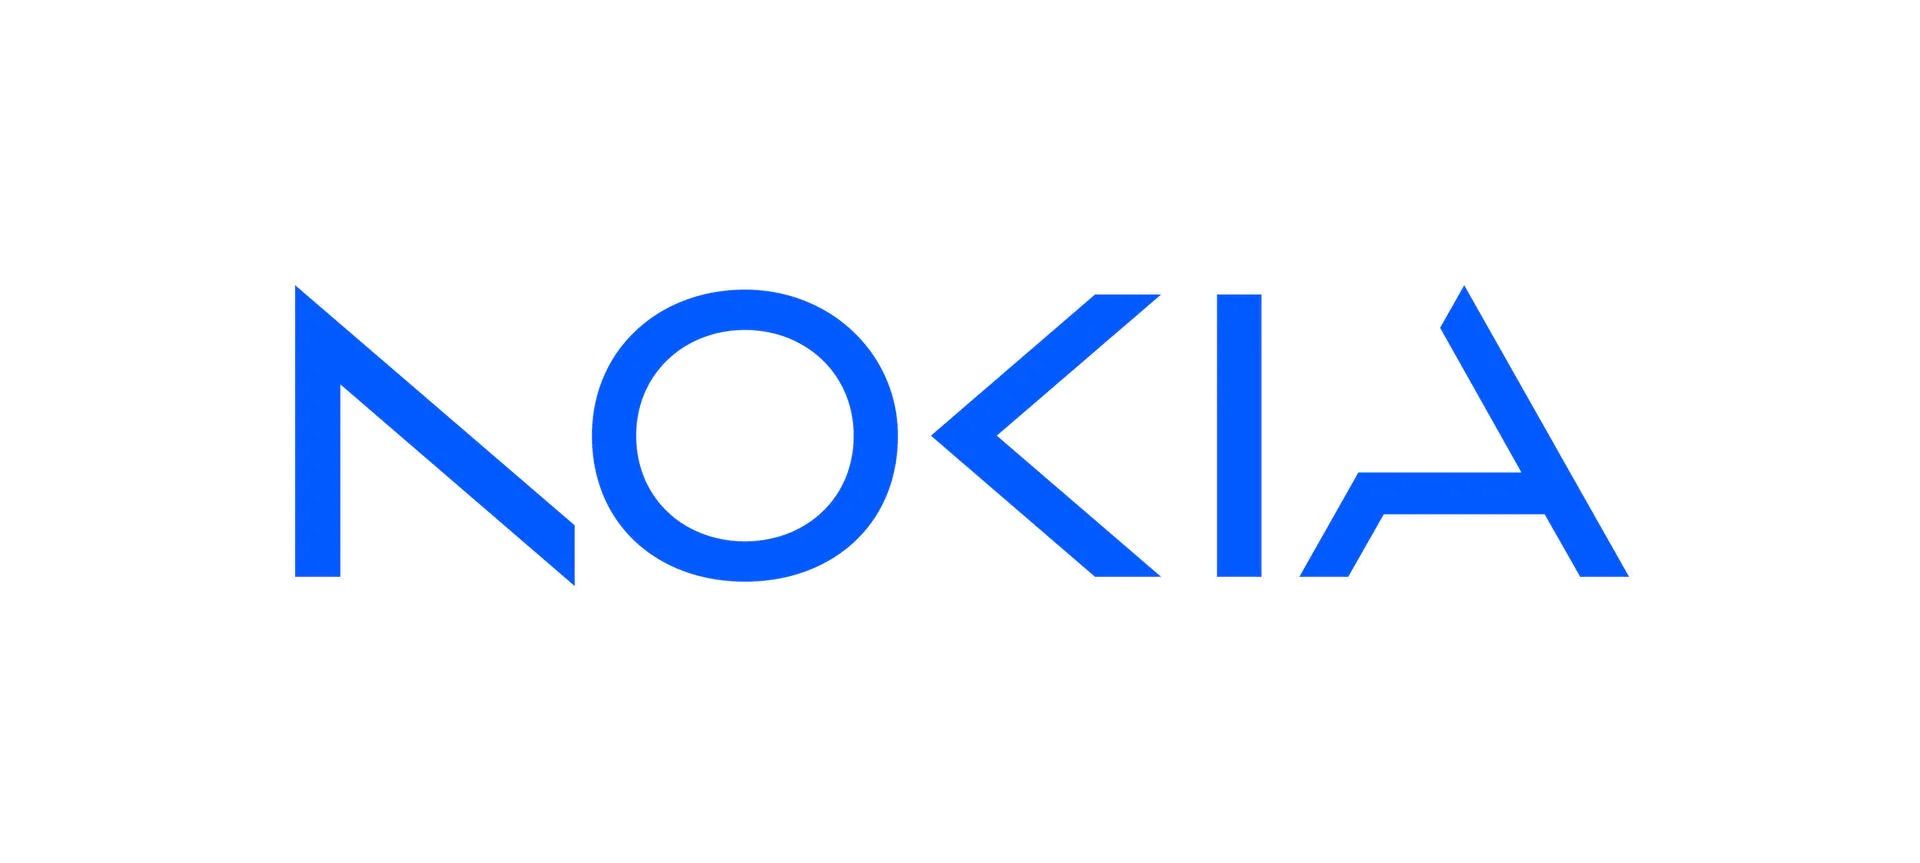 Nokia Q1 net sales rise 10% to 5.8B euros as India biz jumps four-fold